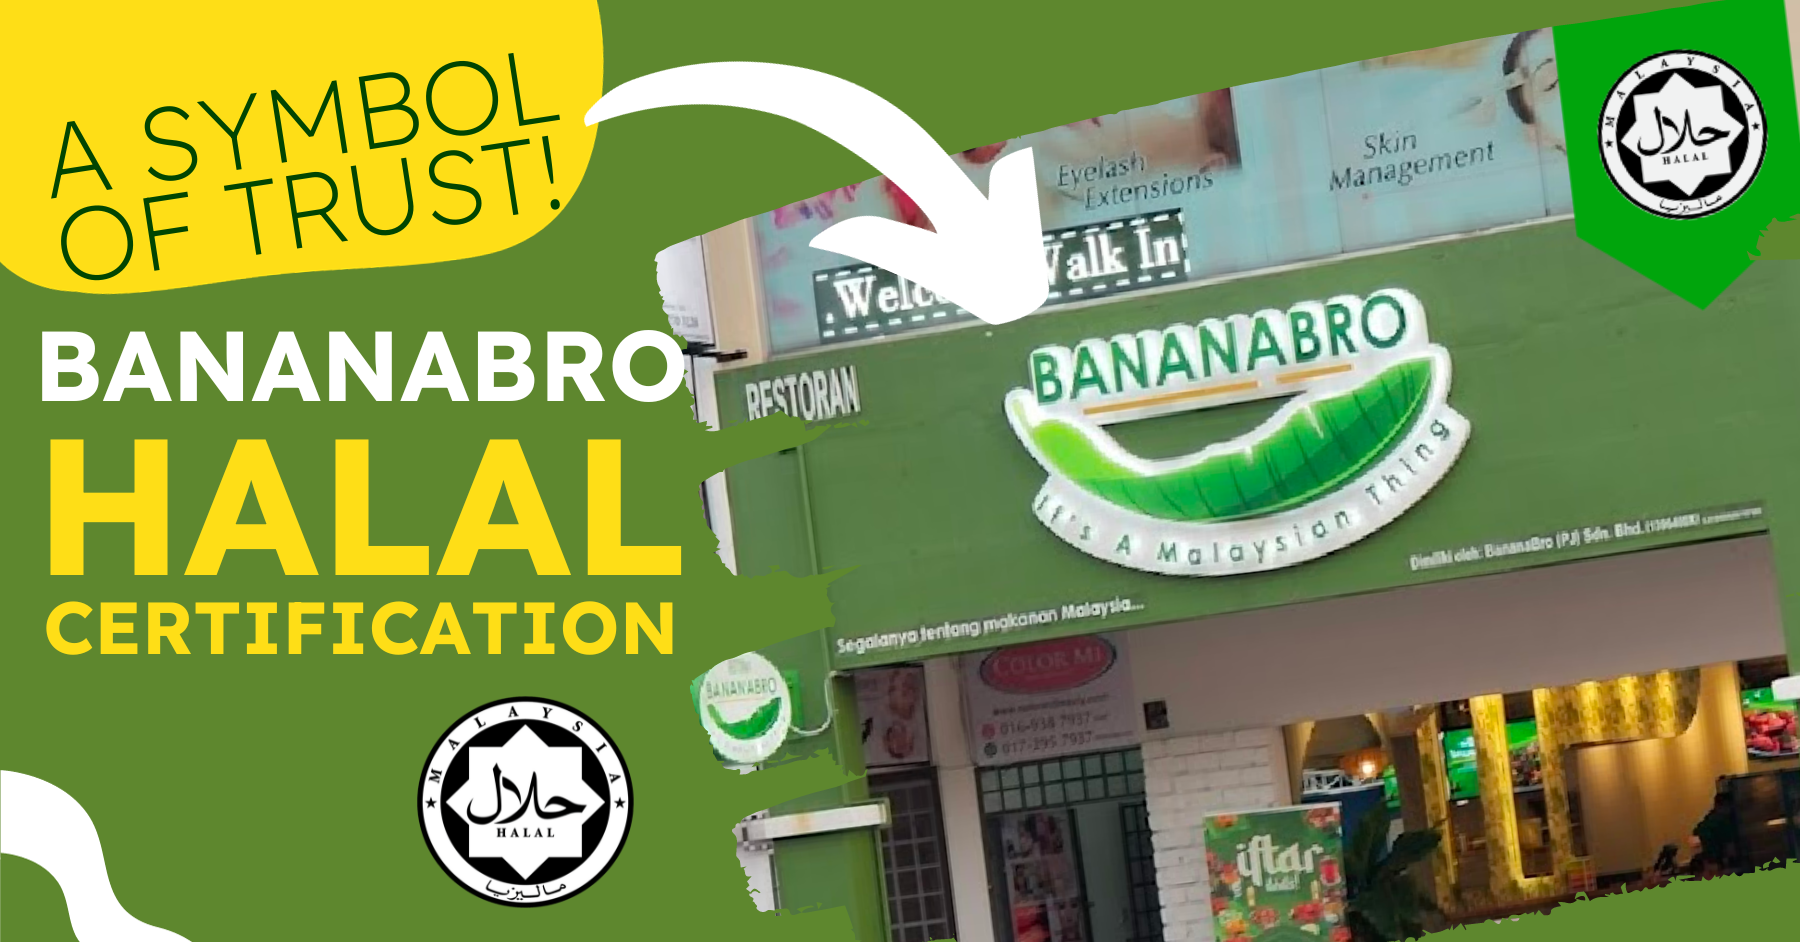 BananaBro Halal Certification: A Symbol of Trust